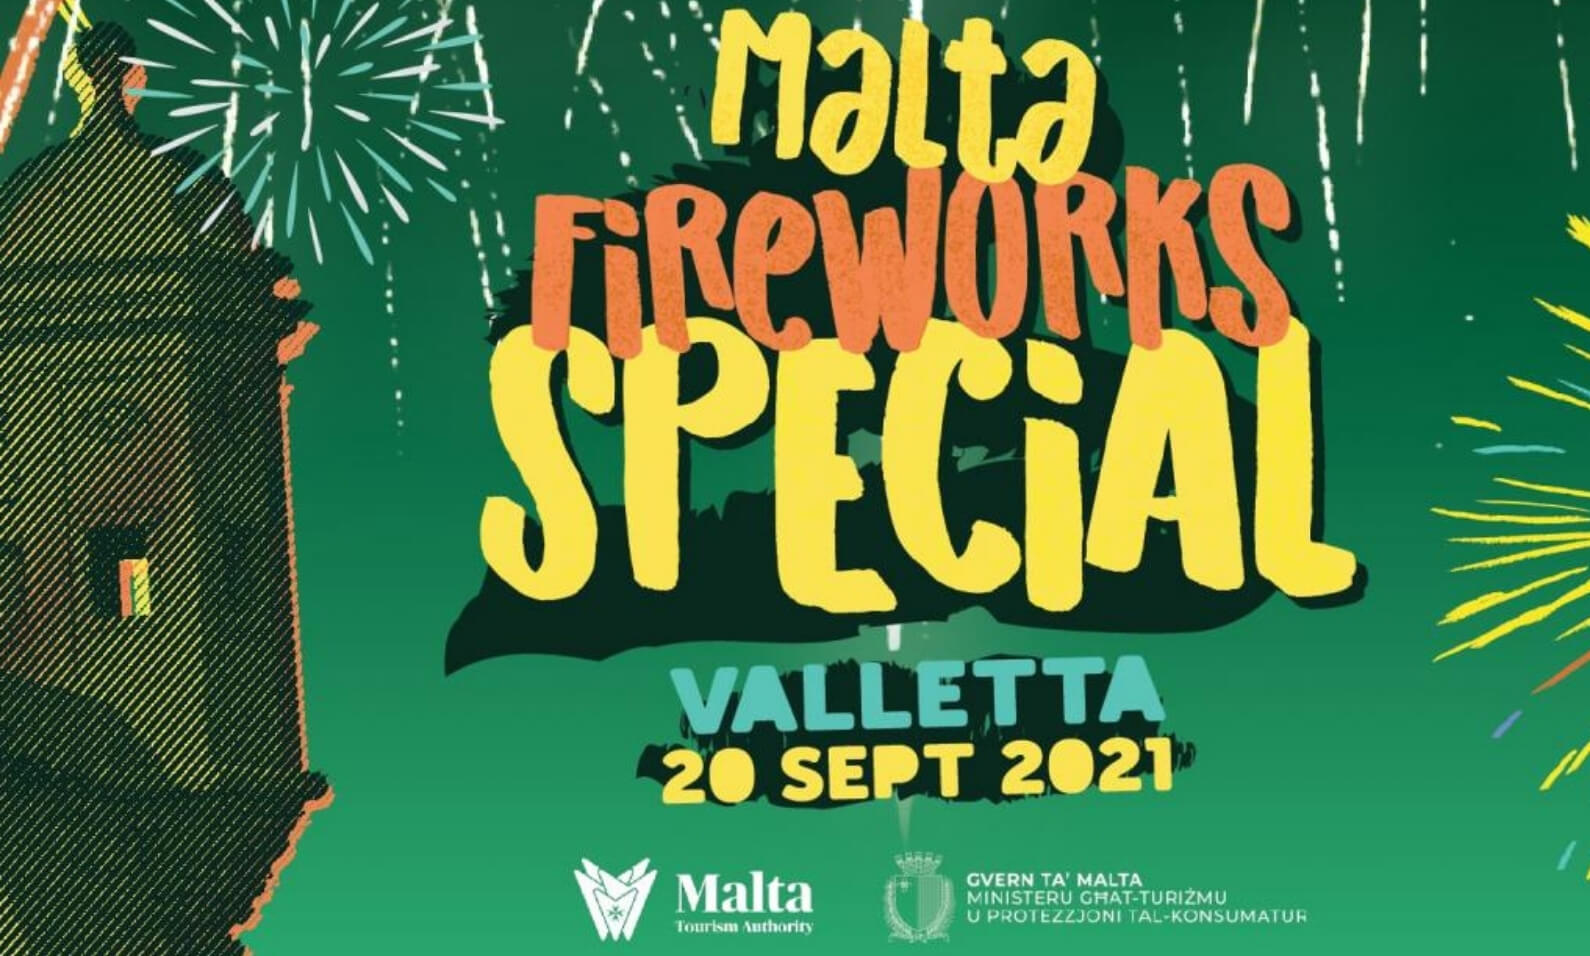 Malta Fireworks Special - Valletta